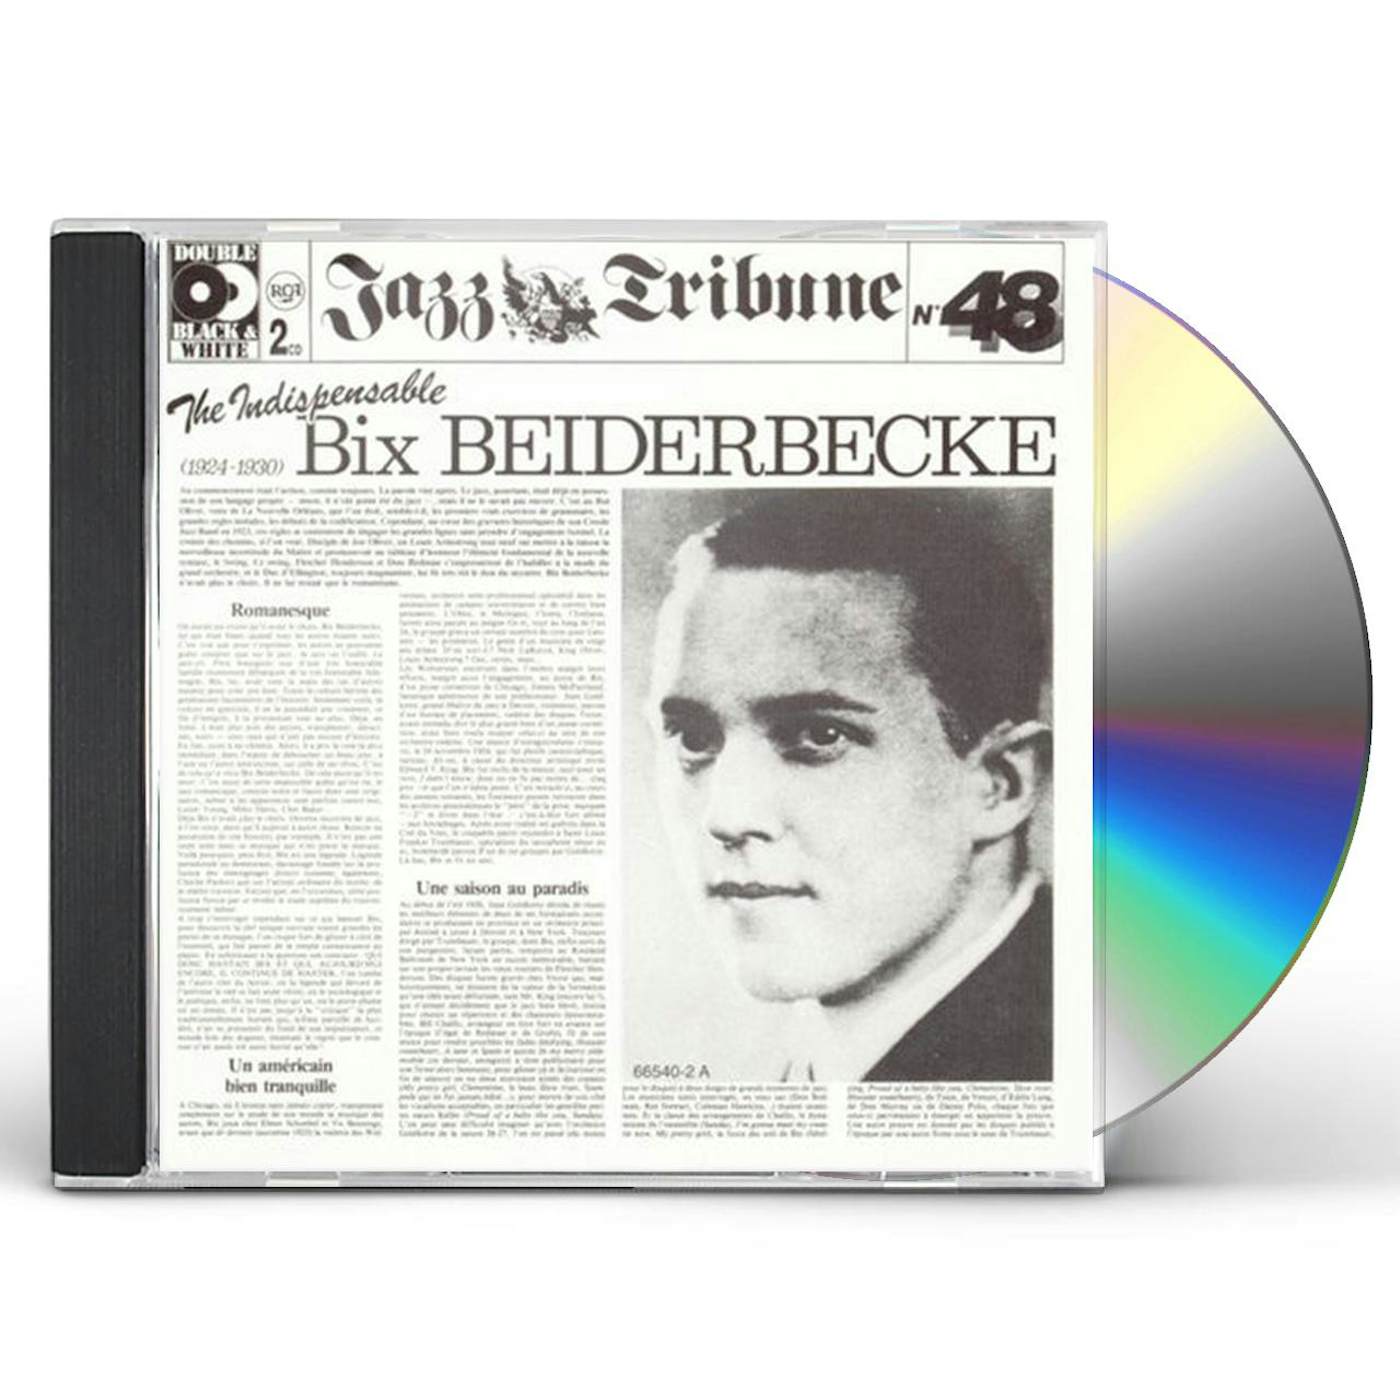 INDISPENSABLE BIX BEIDERBECKE (1925-1930) CD